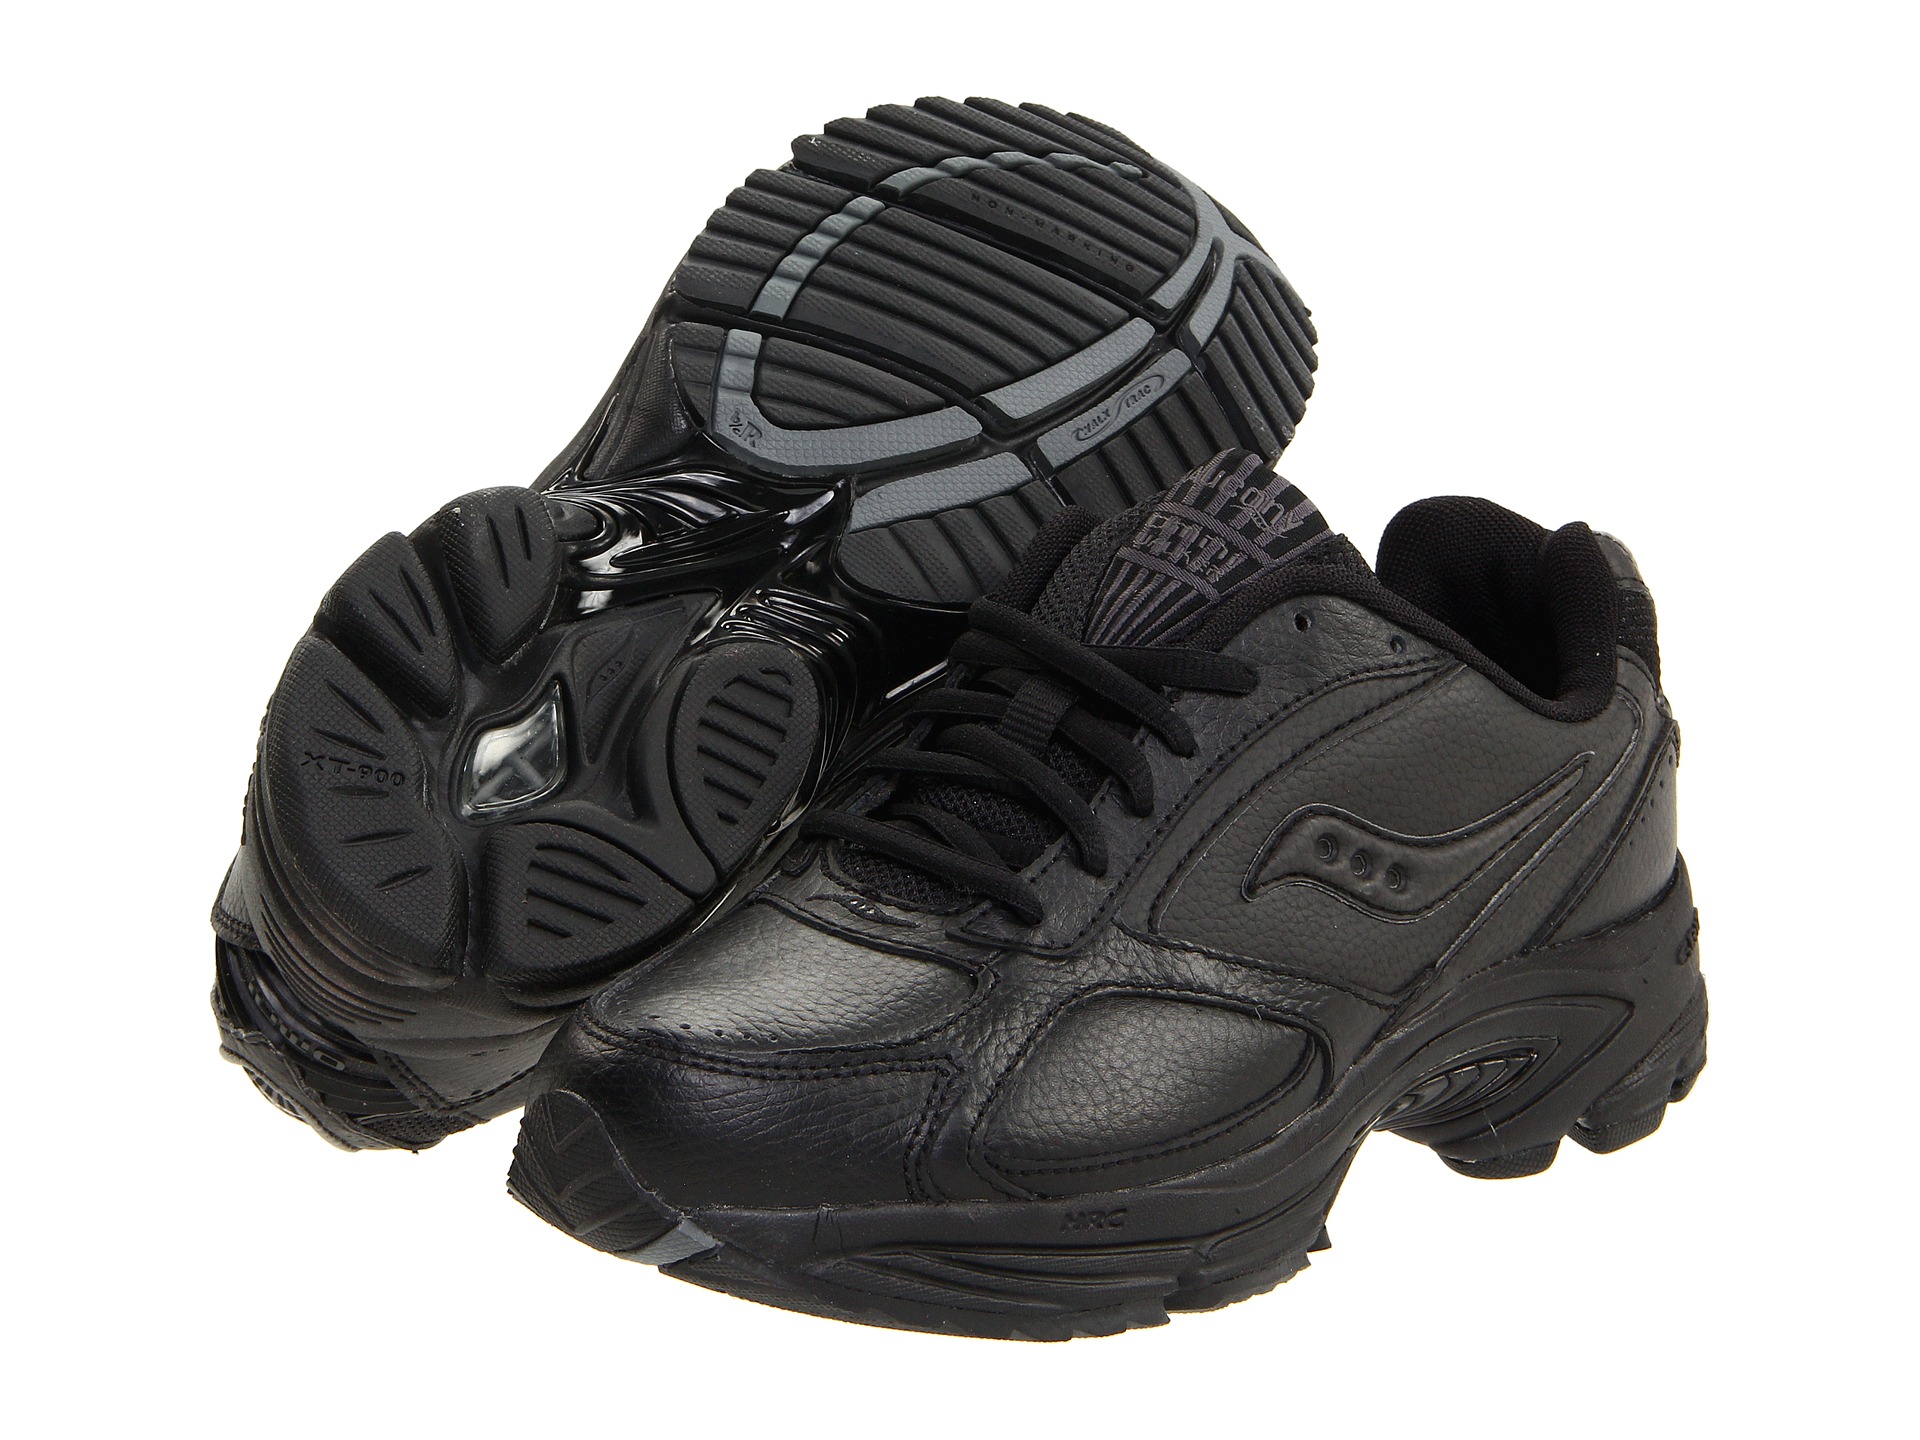 black hospital shoes